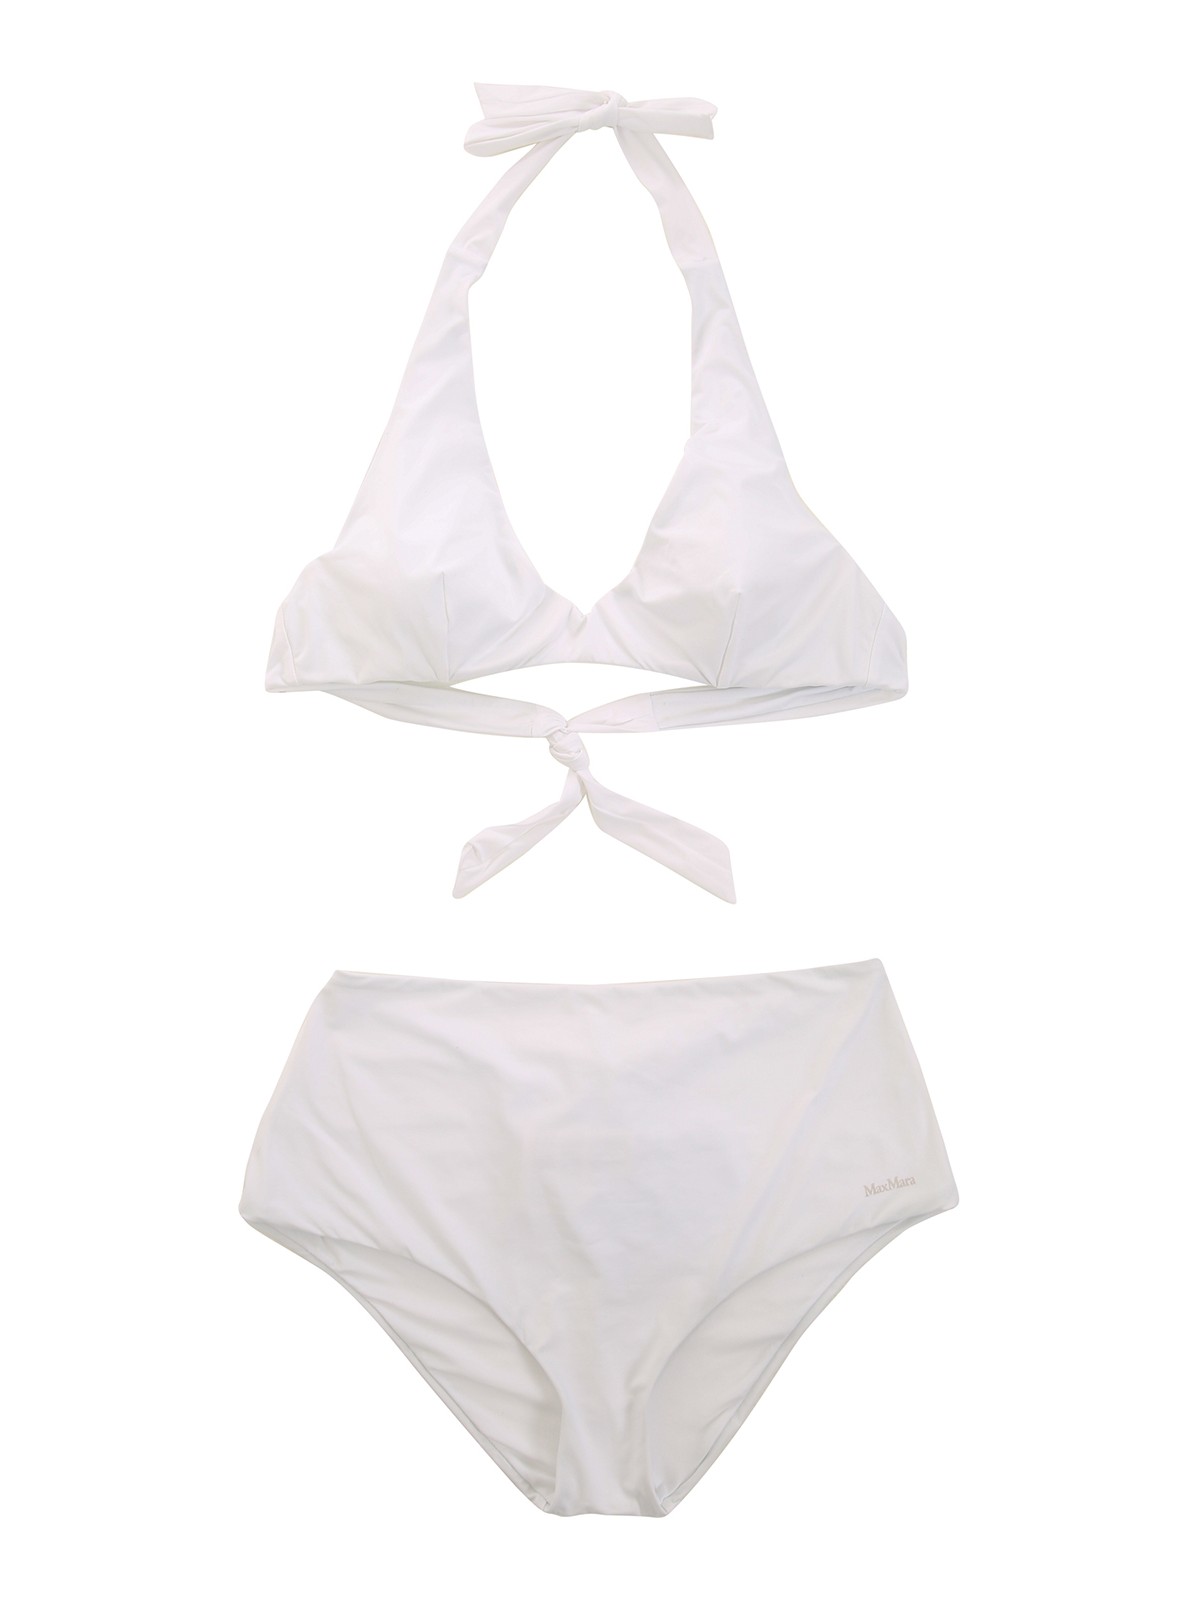 Bikinis Max Mara - Ronco bikini - 38310428600008 | Shop online at iKRIX